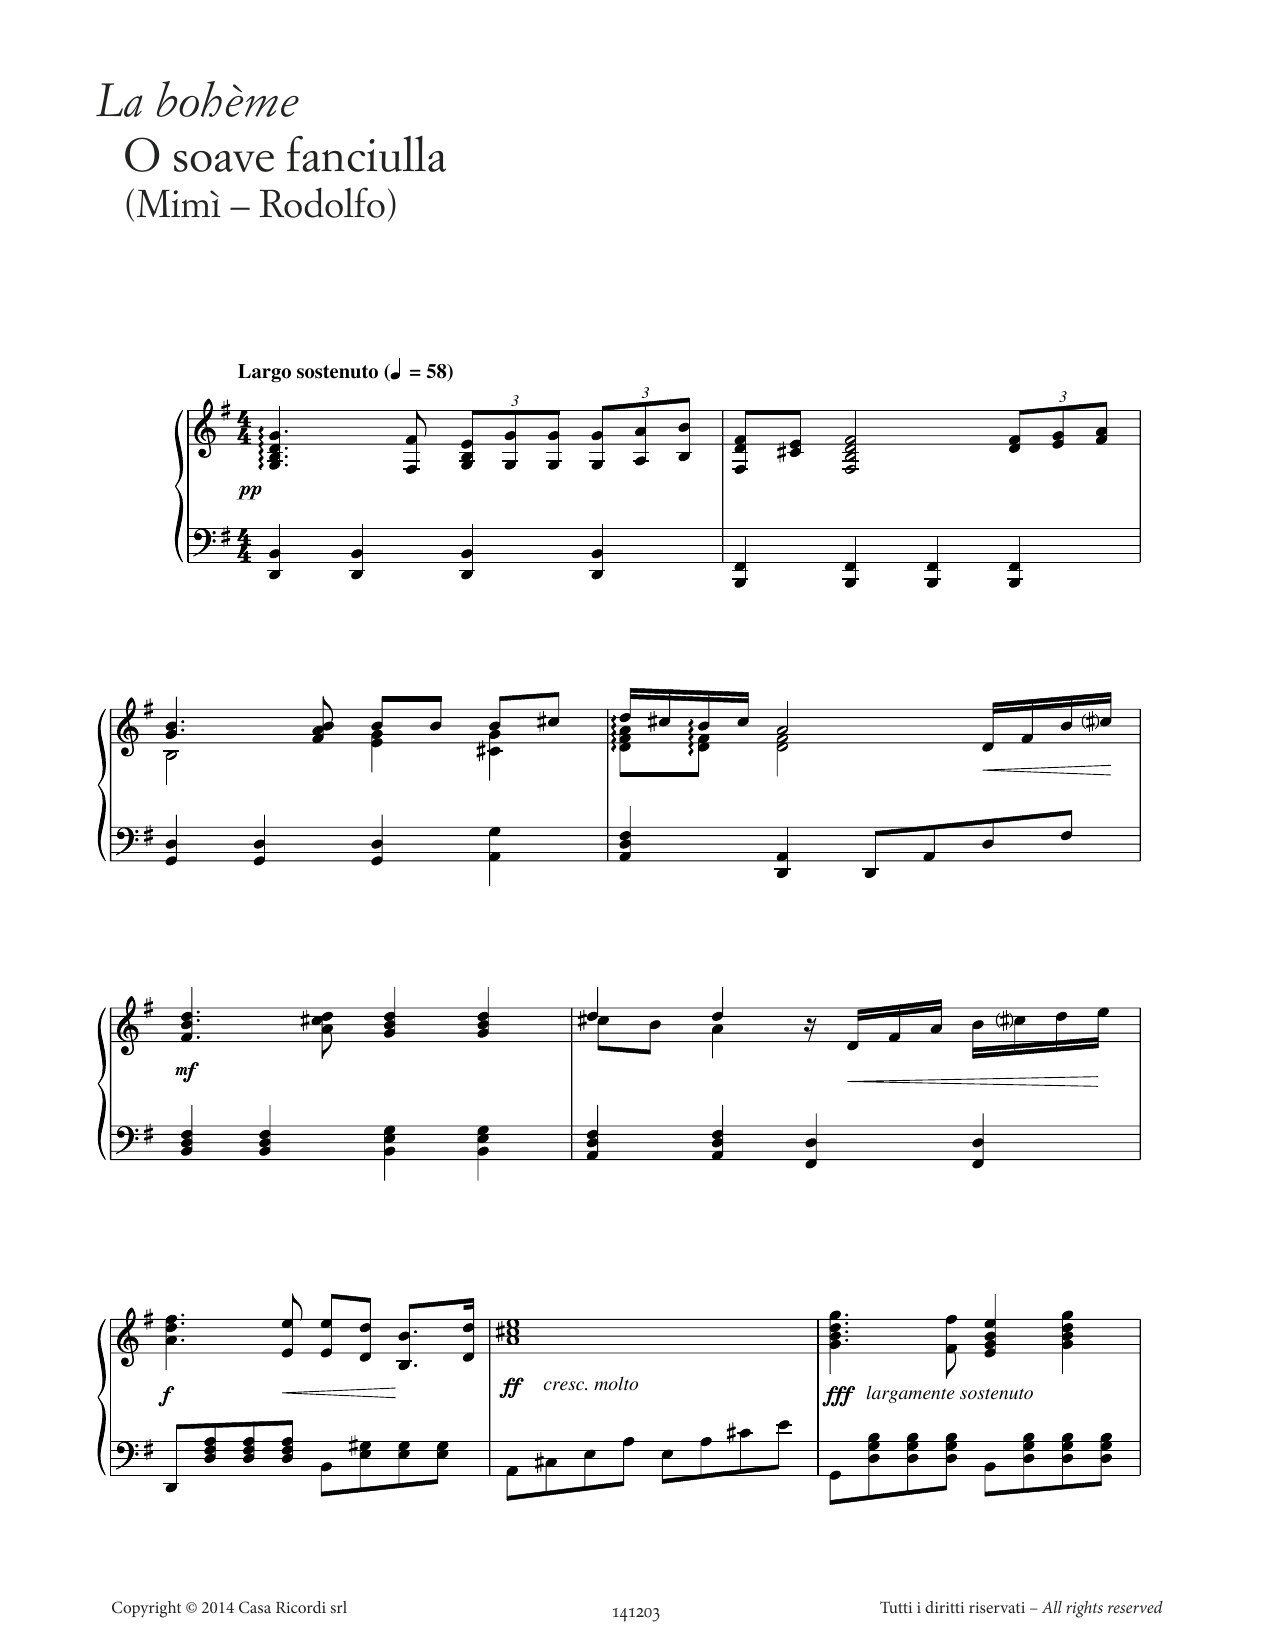 Giacomo Puccini O soave fanciulla (from La Bohème) Sheet Music Notes & Chords for Piano Solo - Download or Print PDF